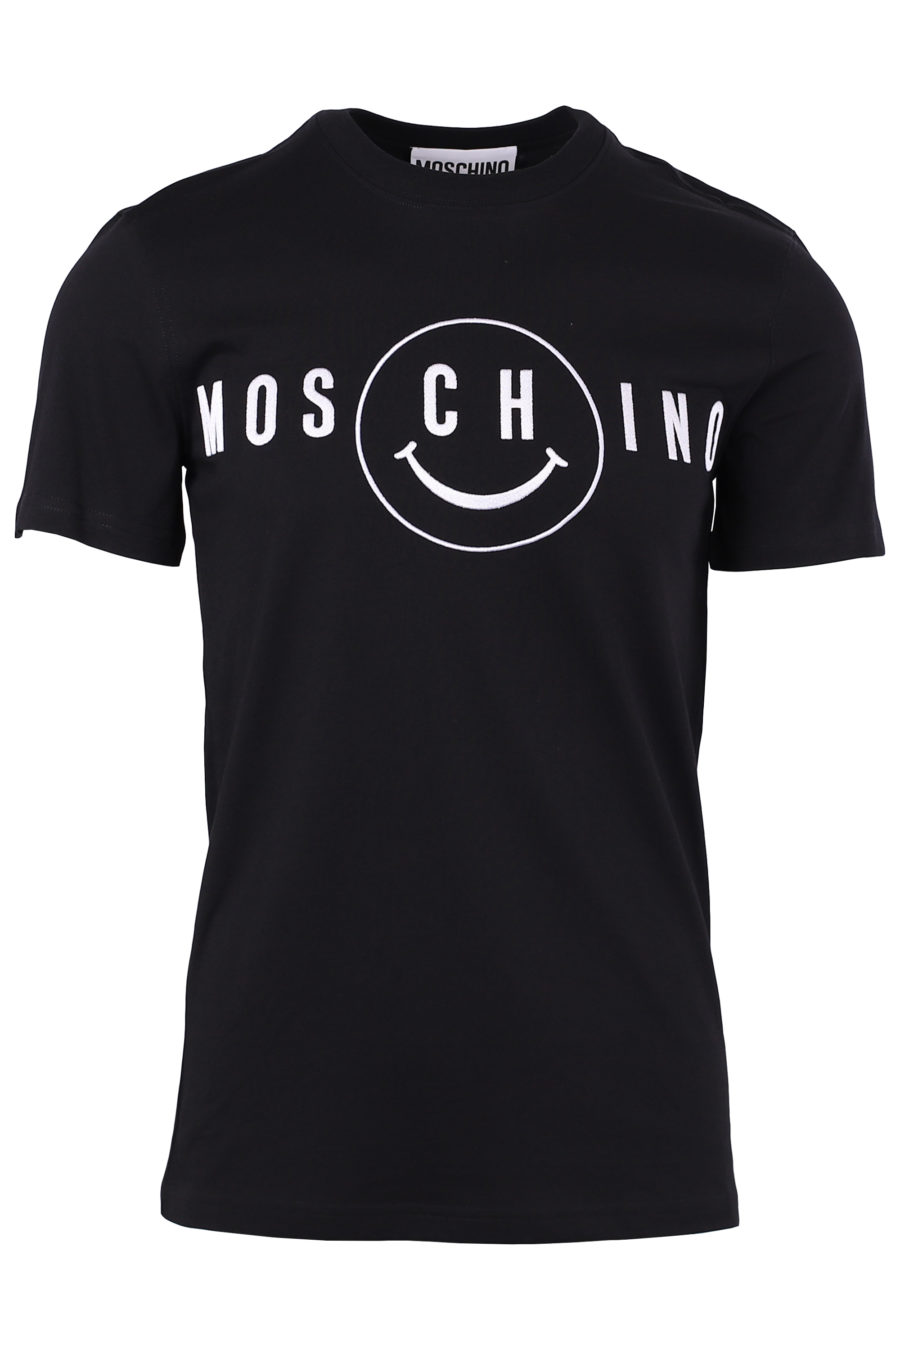 Camiseta negra "Smiley" con logo bordado - IMG 9995